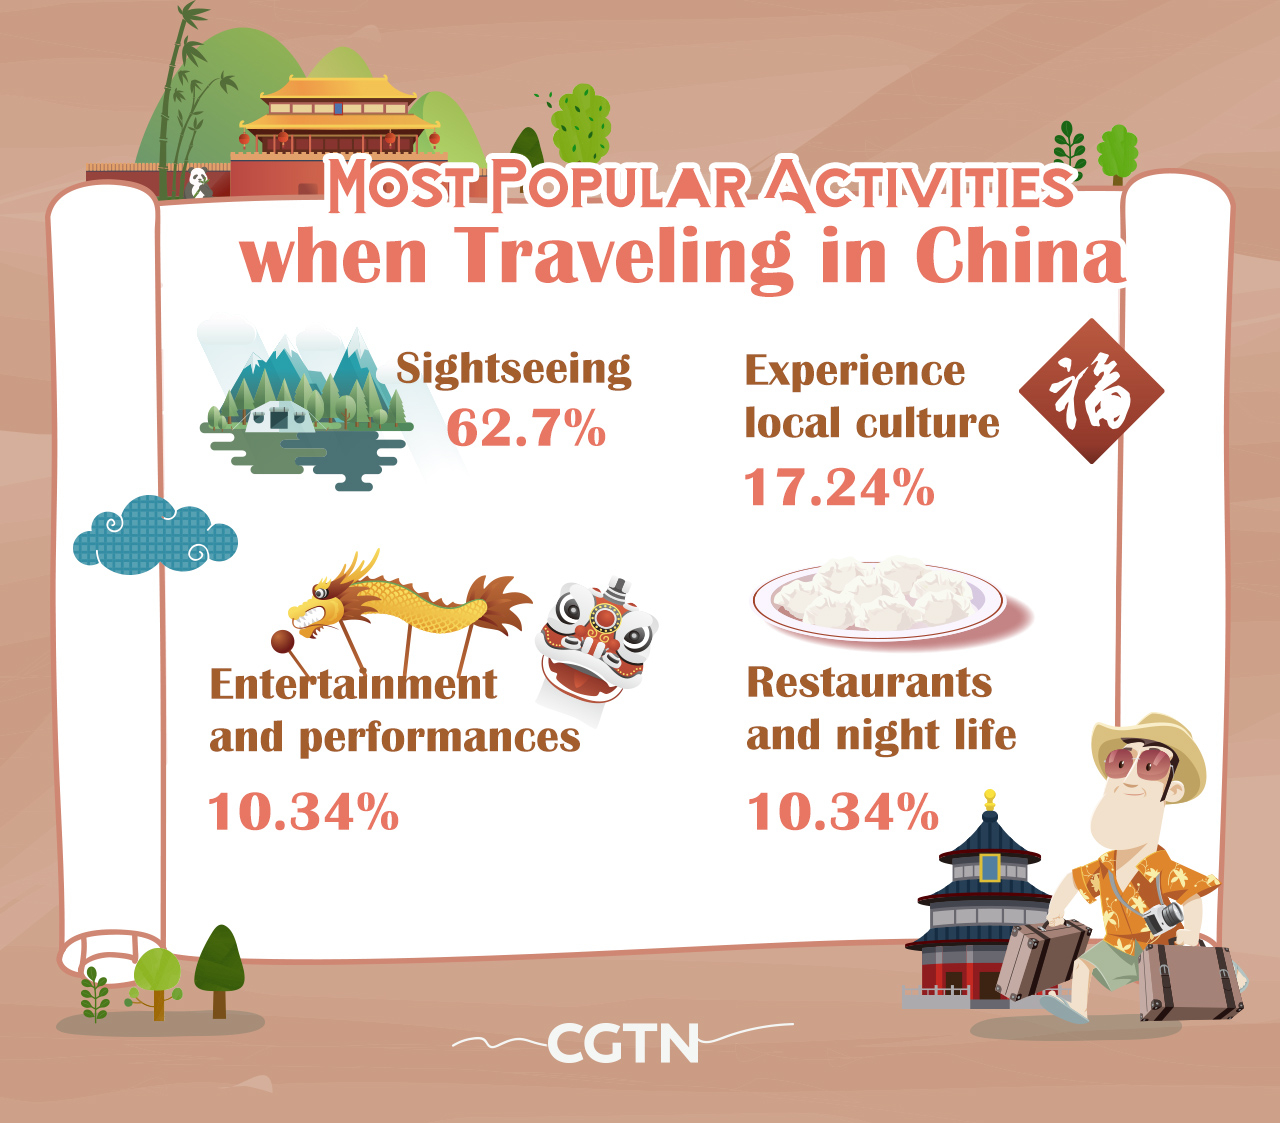 china tourism investor relations